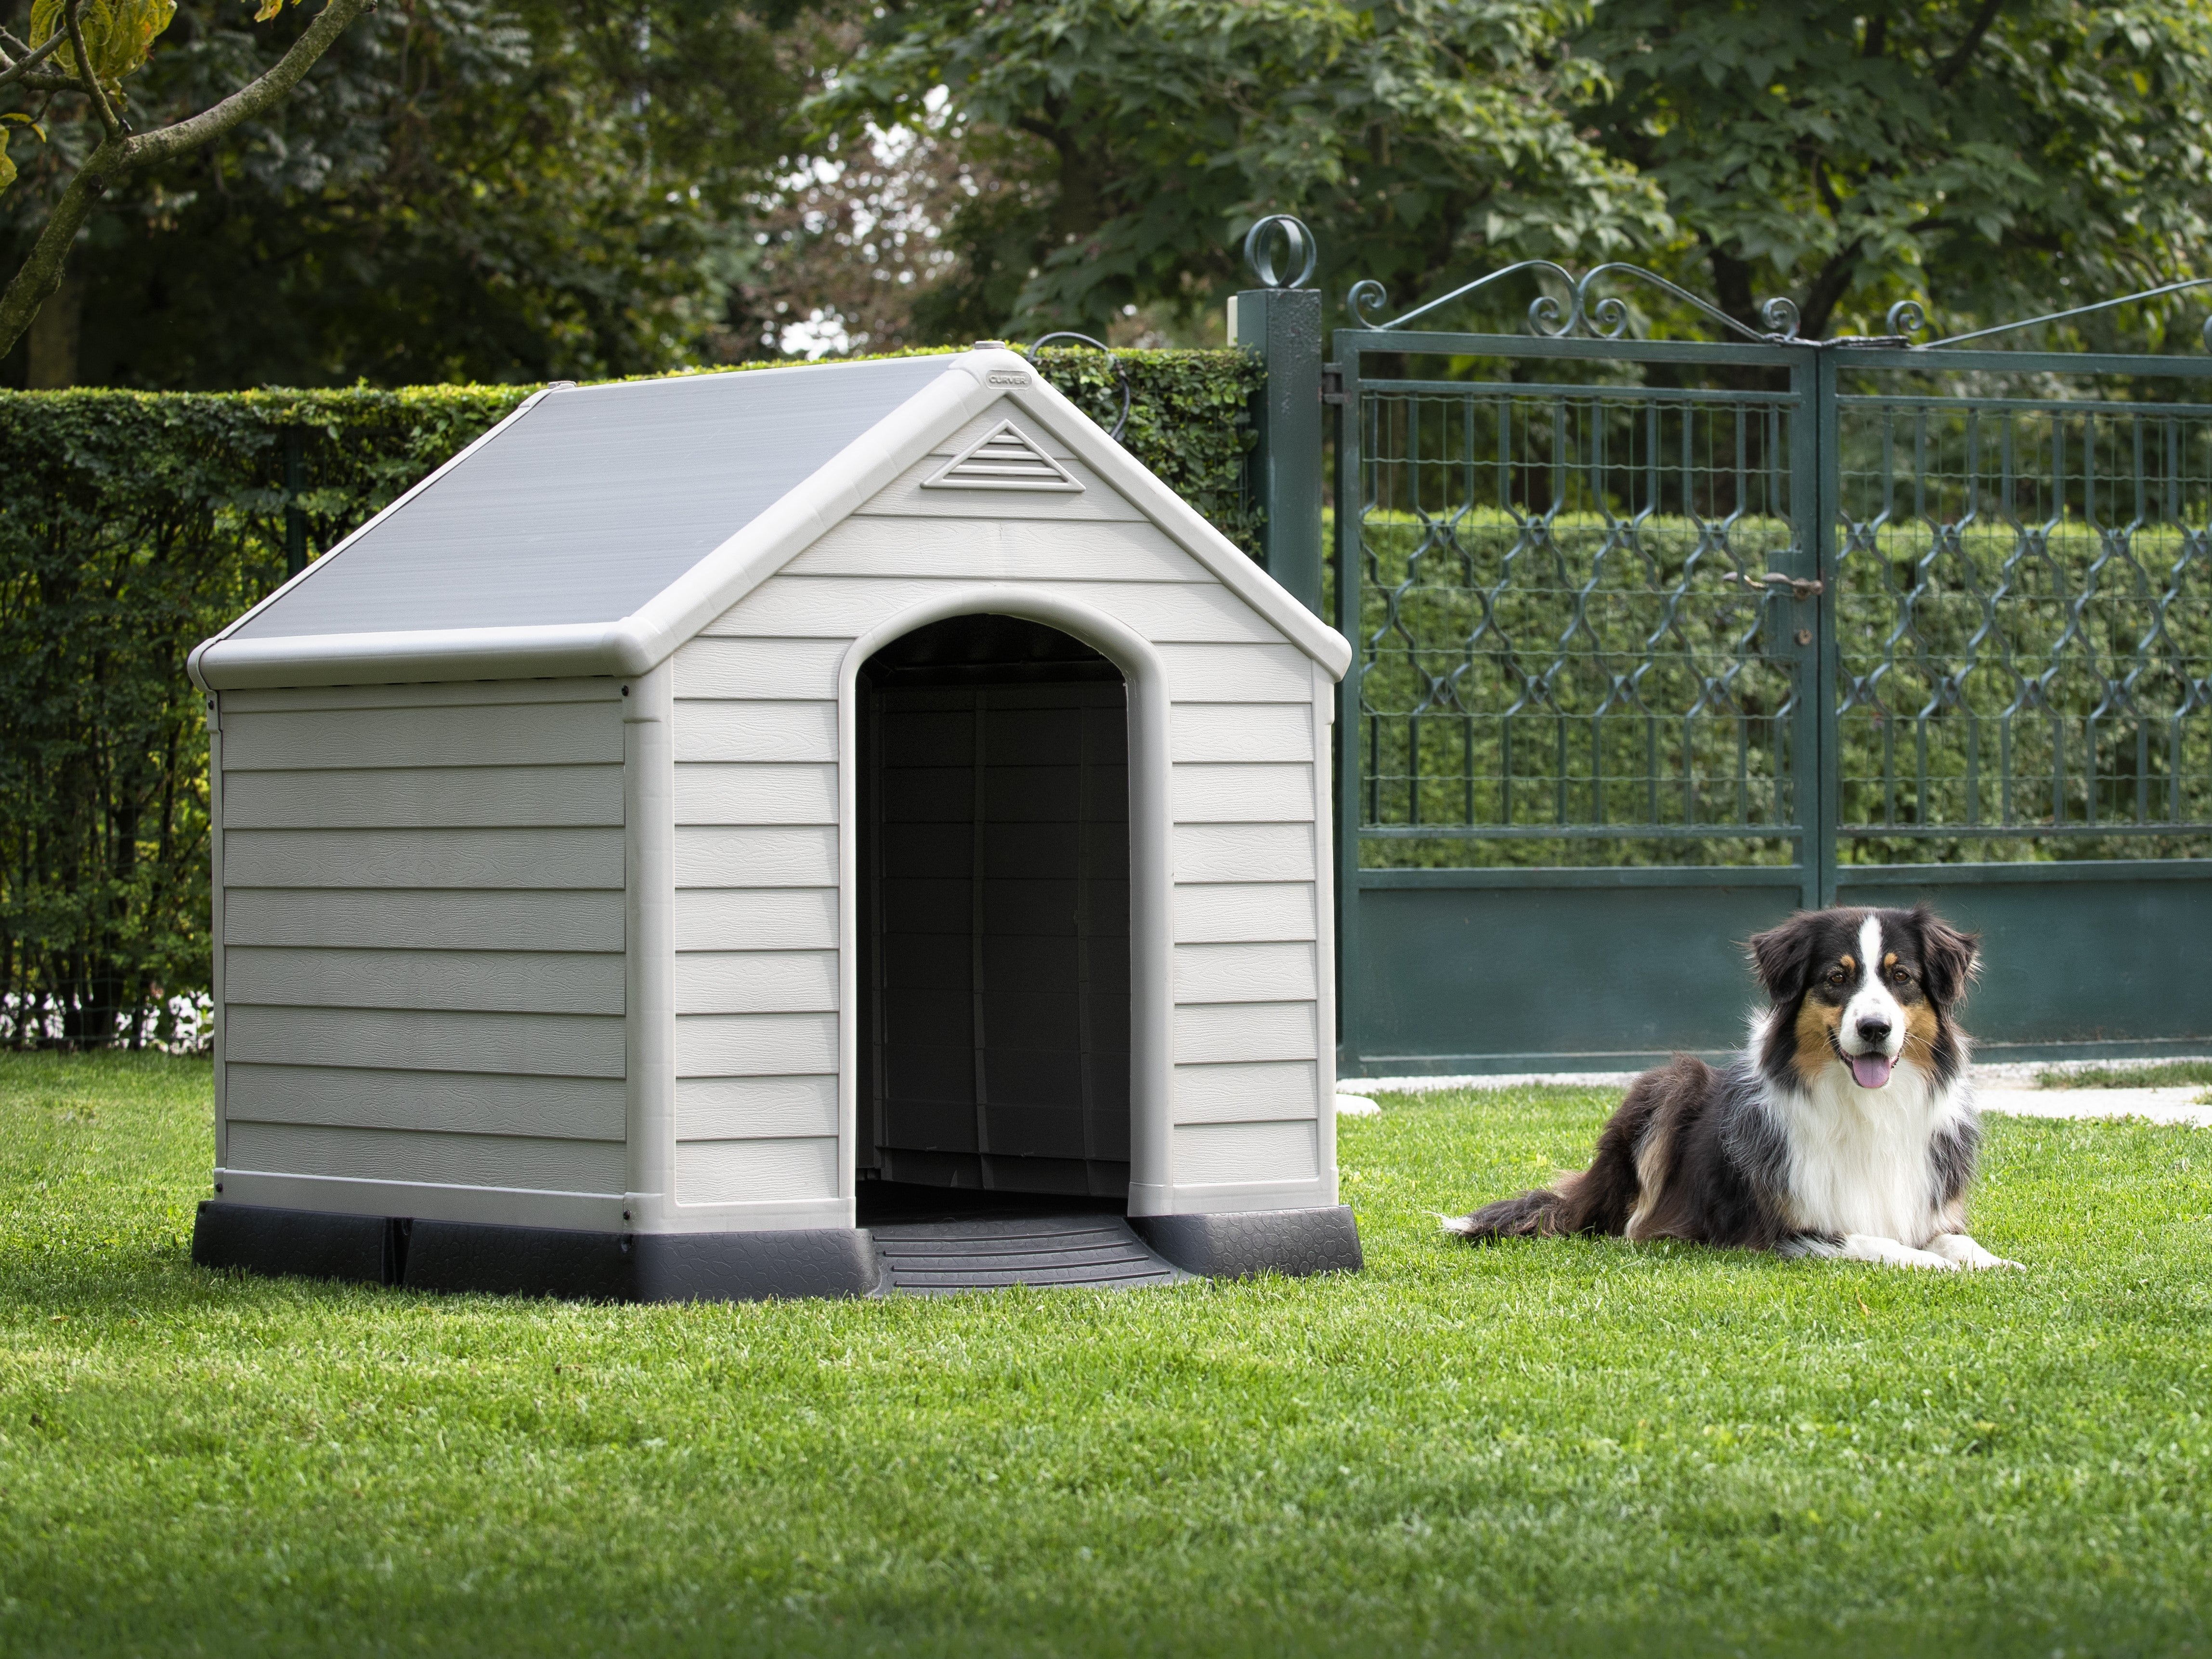 Dog sitting on lawn by a dog house